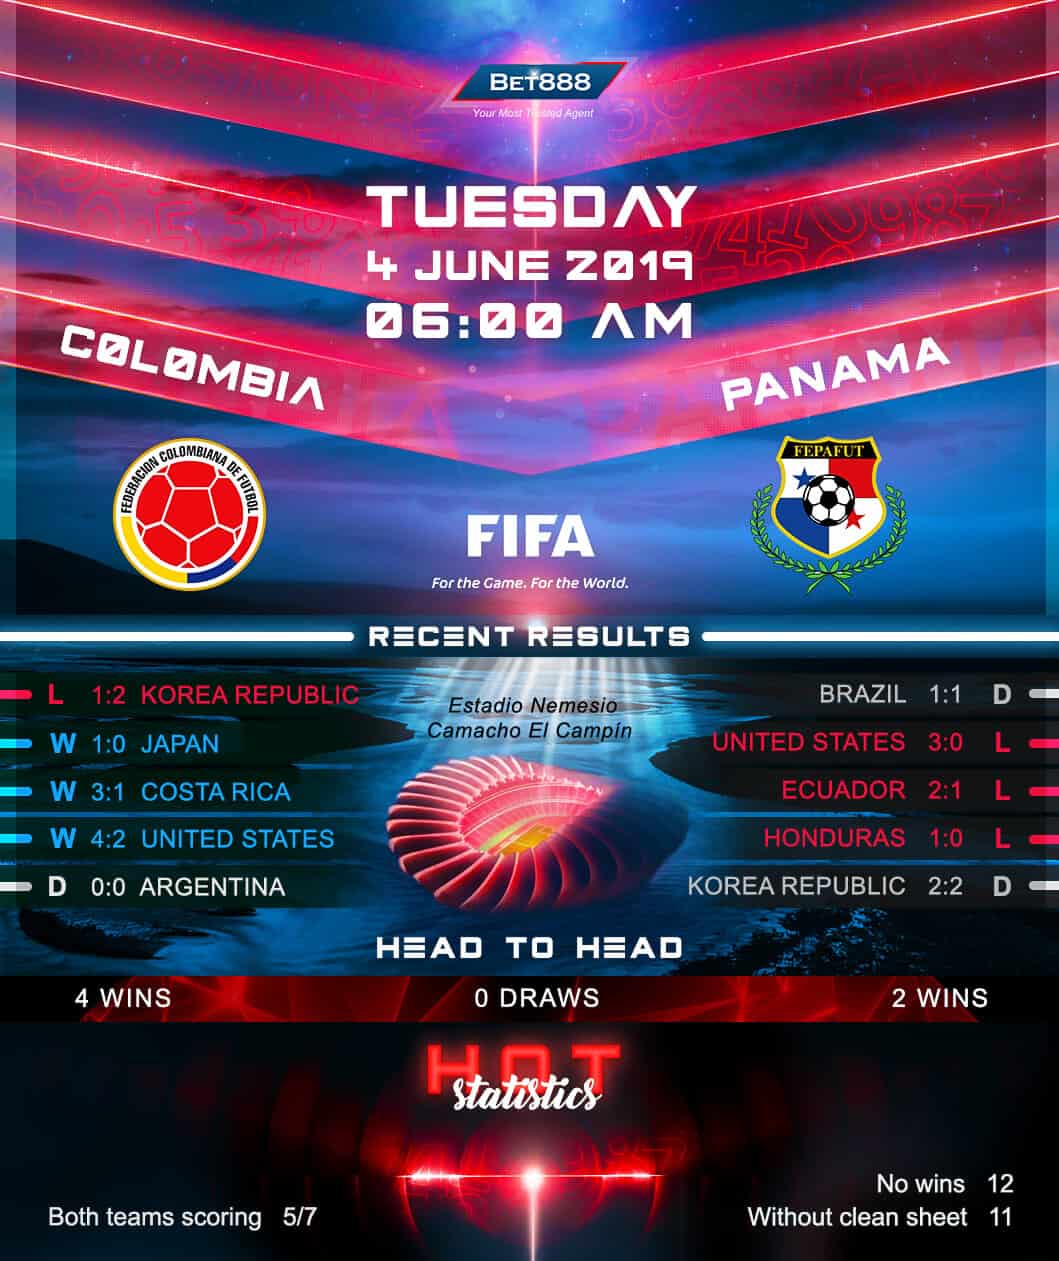 Colombia vs Panama﻿ 04/06/19